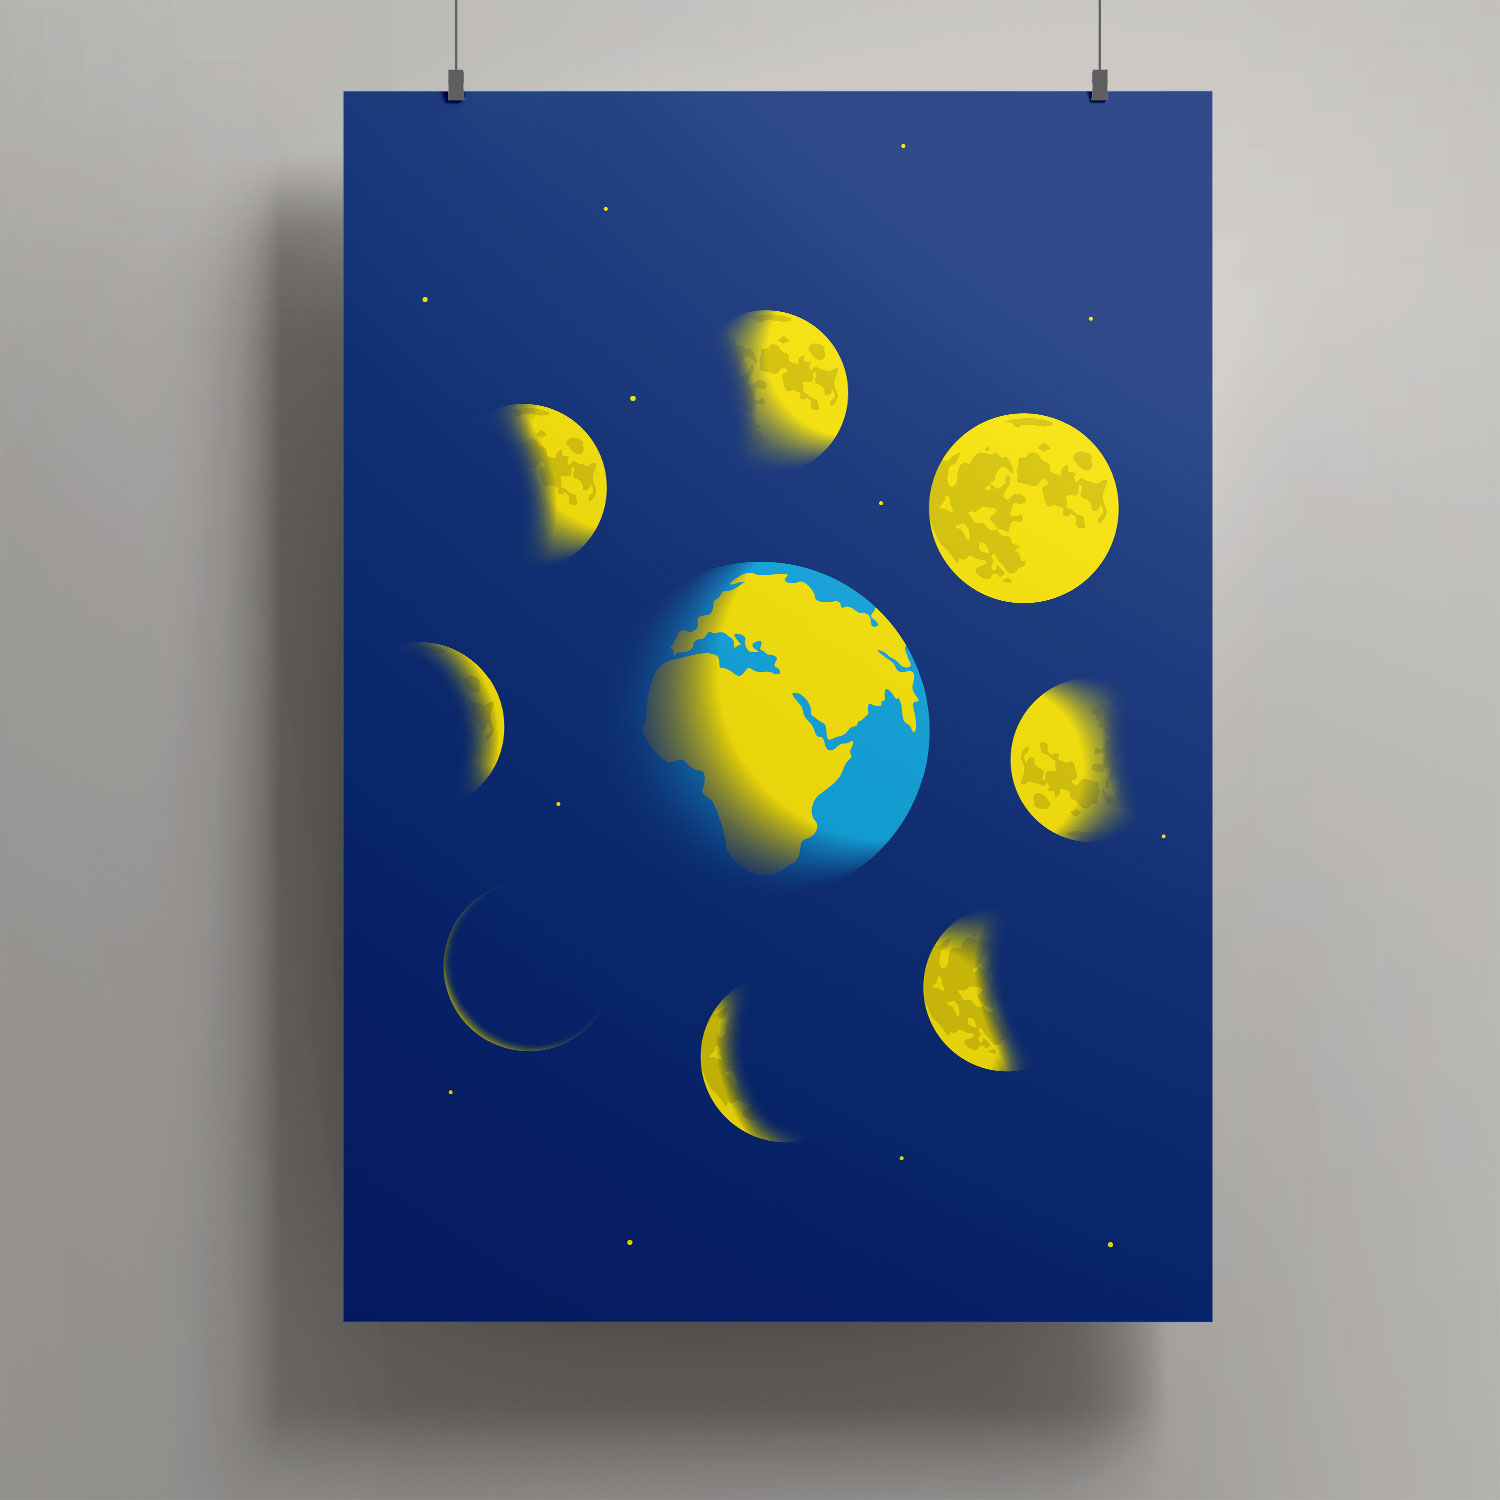 Artprint A3 - moon